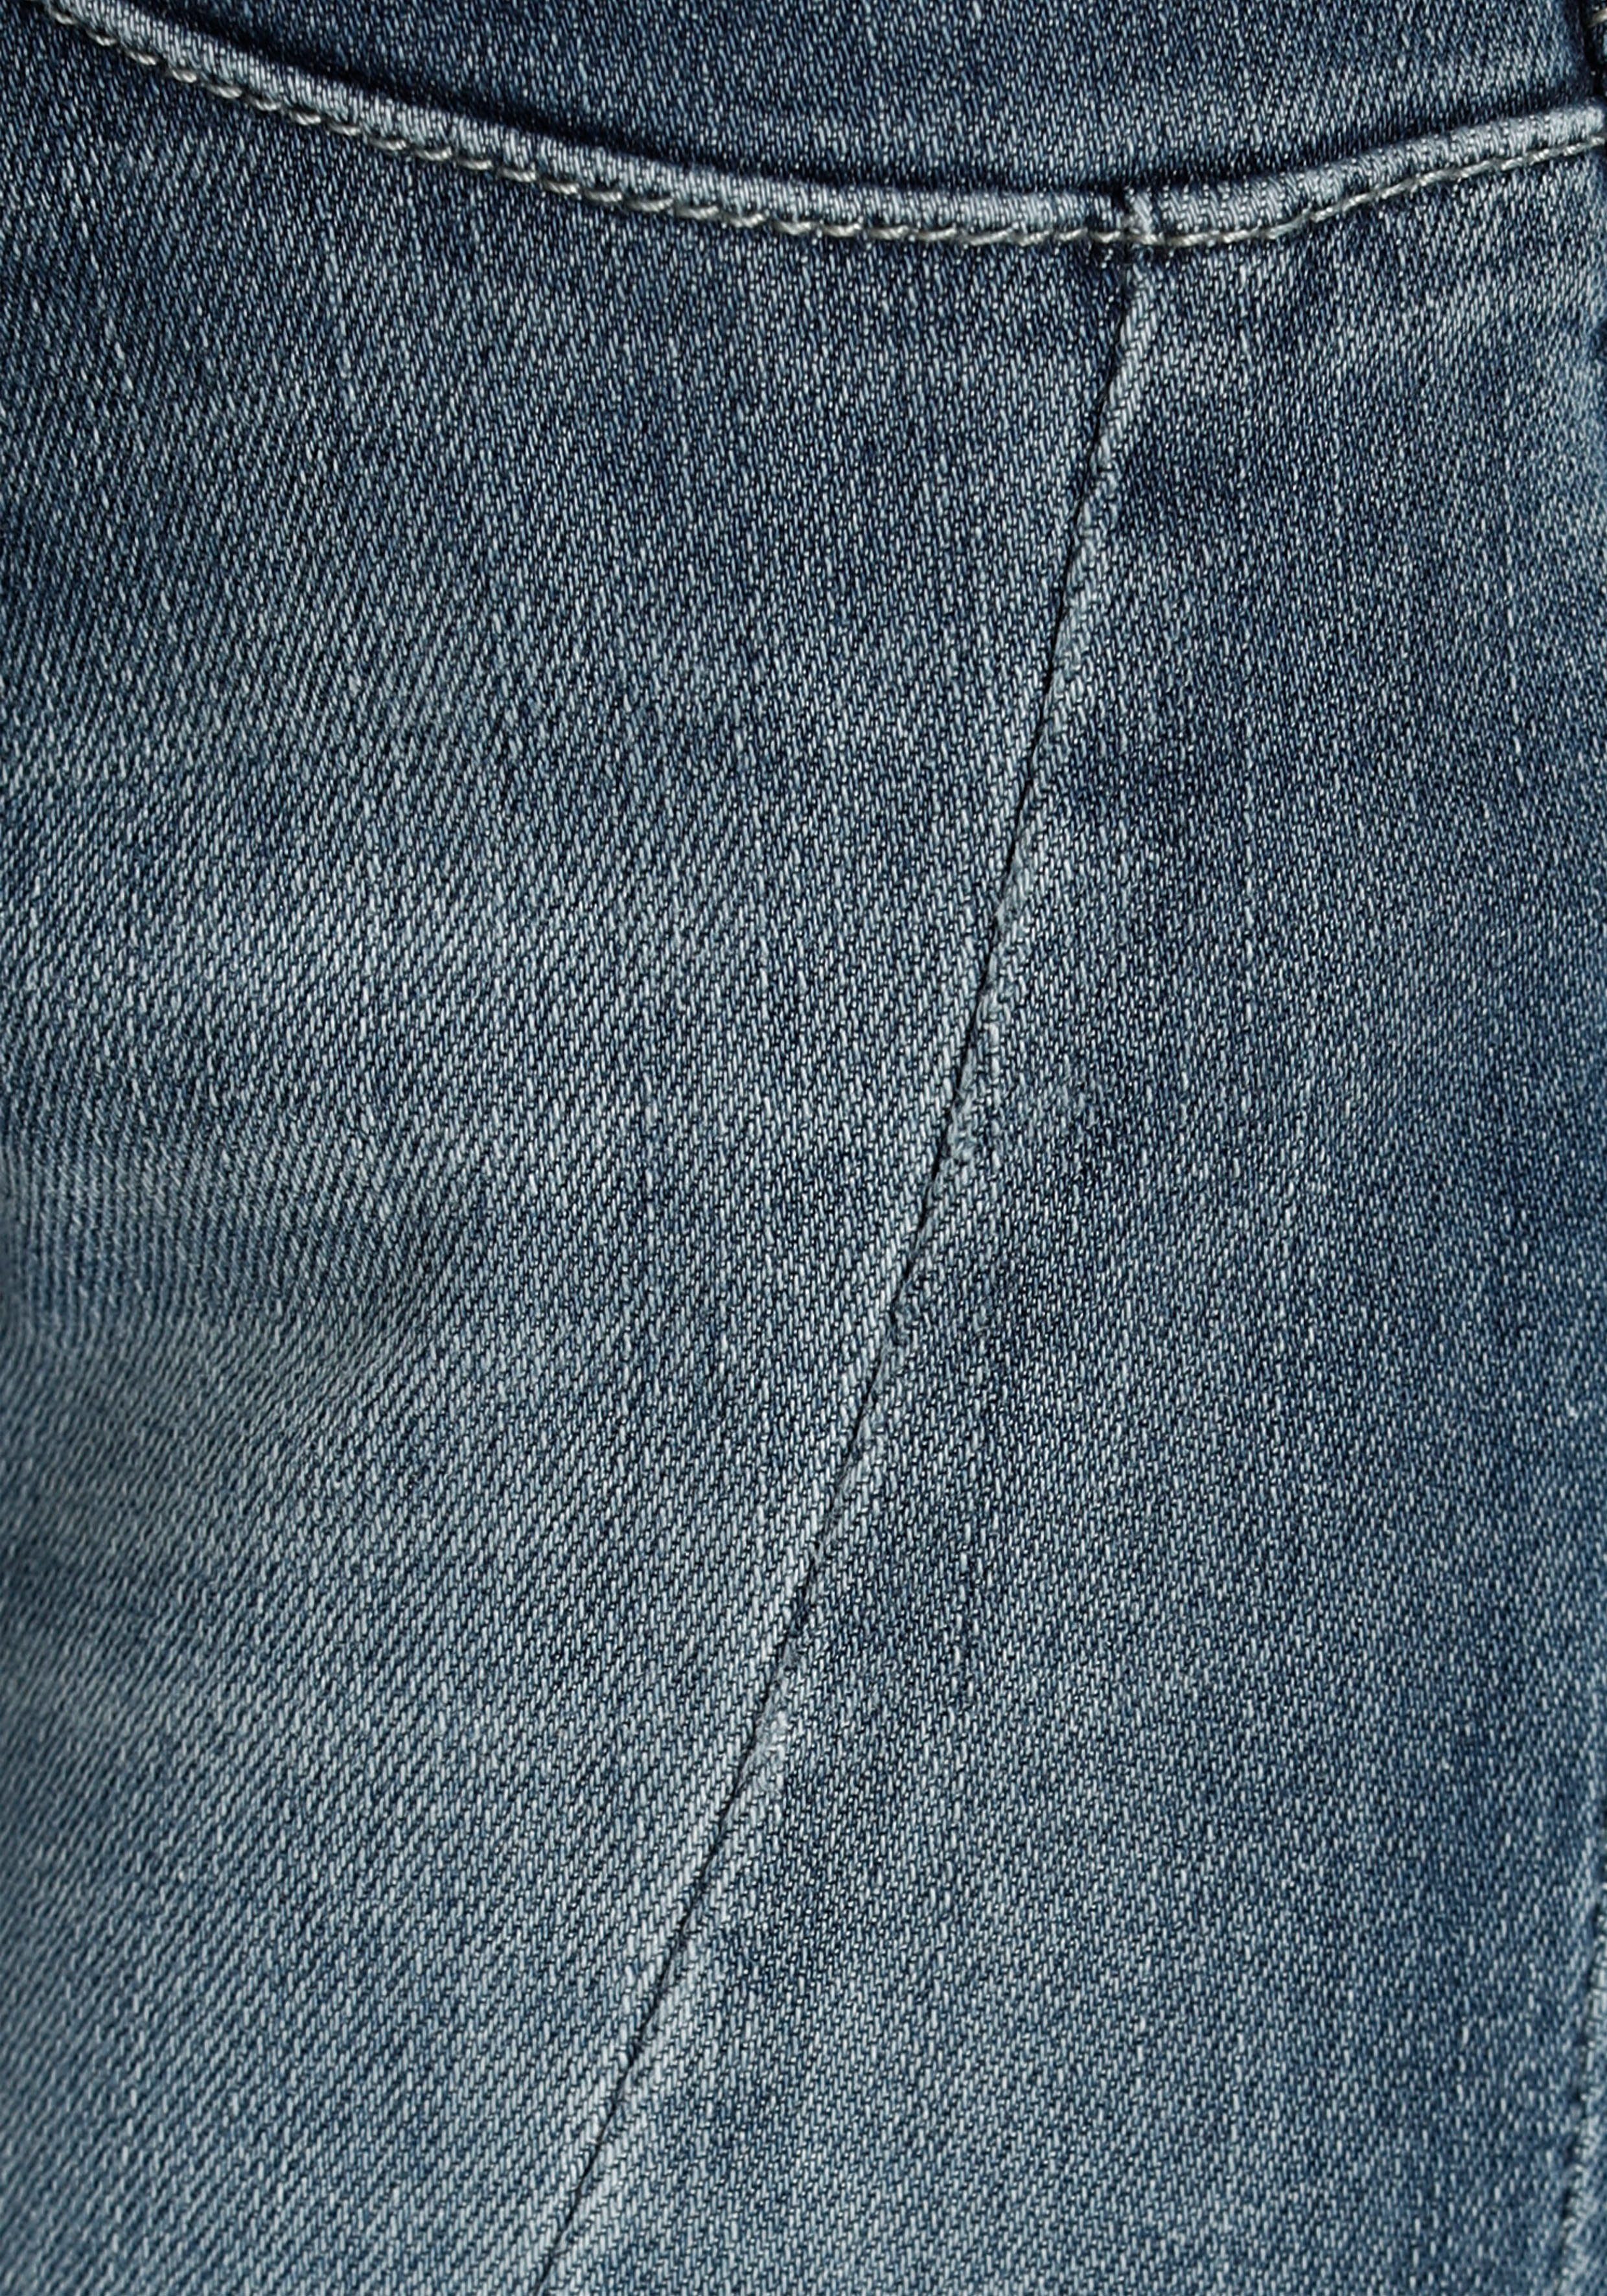 Damen Jeans Please Jeans Boyfriend-Jeans P 78A im Authentic Used Look